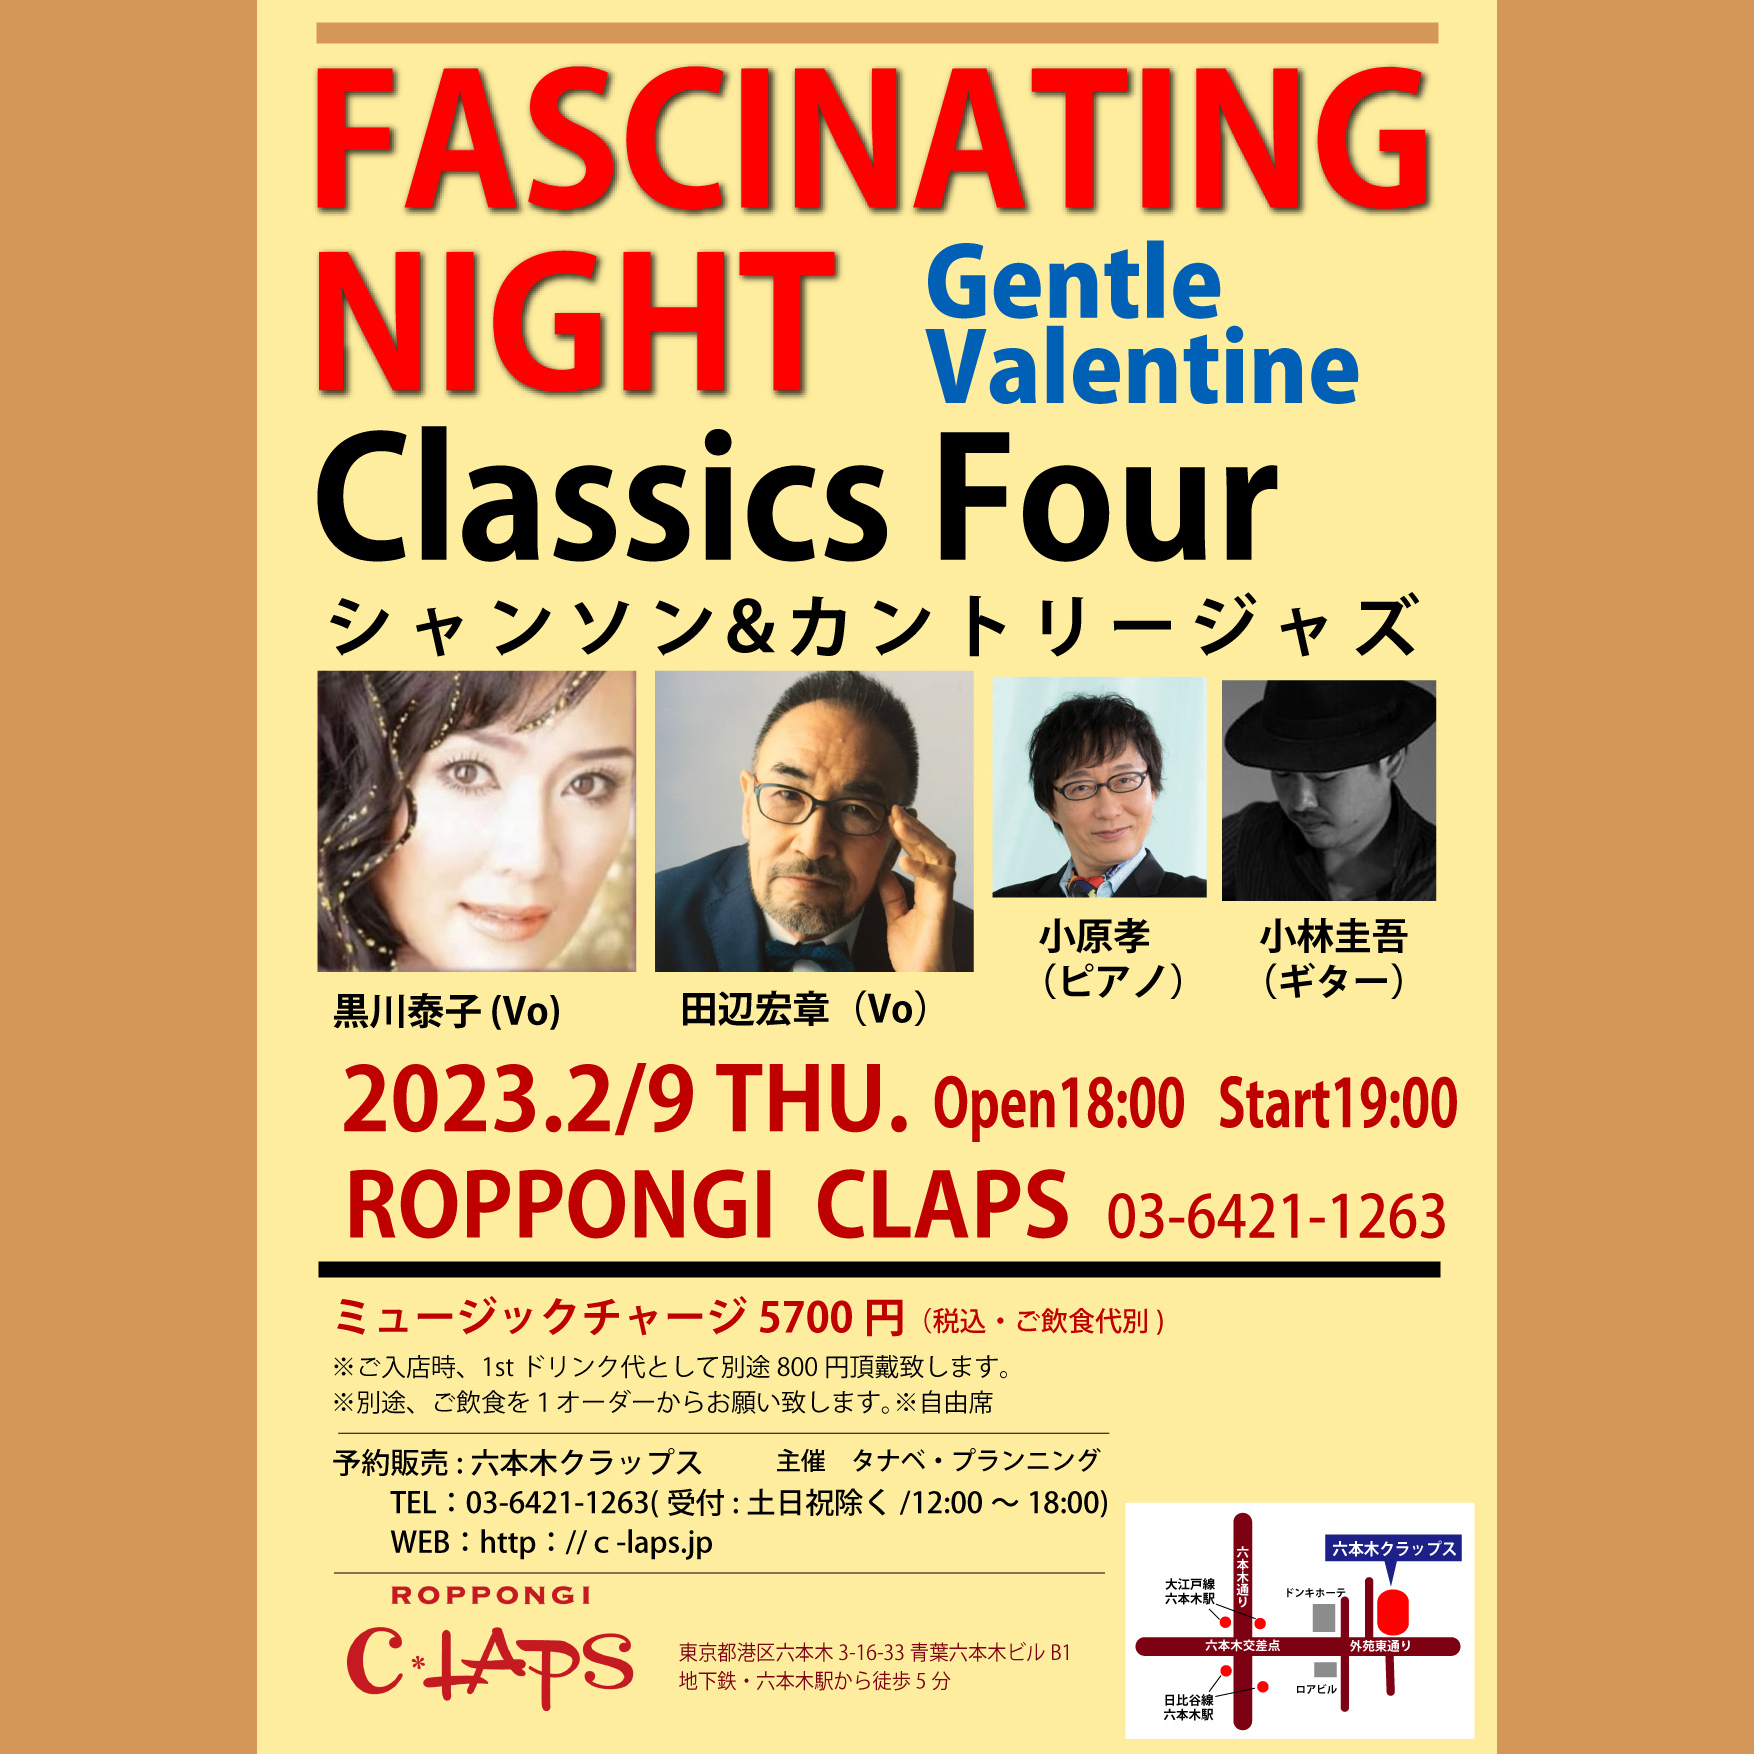 【SOLD OUT!!】FASCINATING NIGHT Gentle Valentine Classics Four シャンソン&カントリージャズ